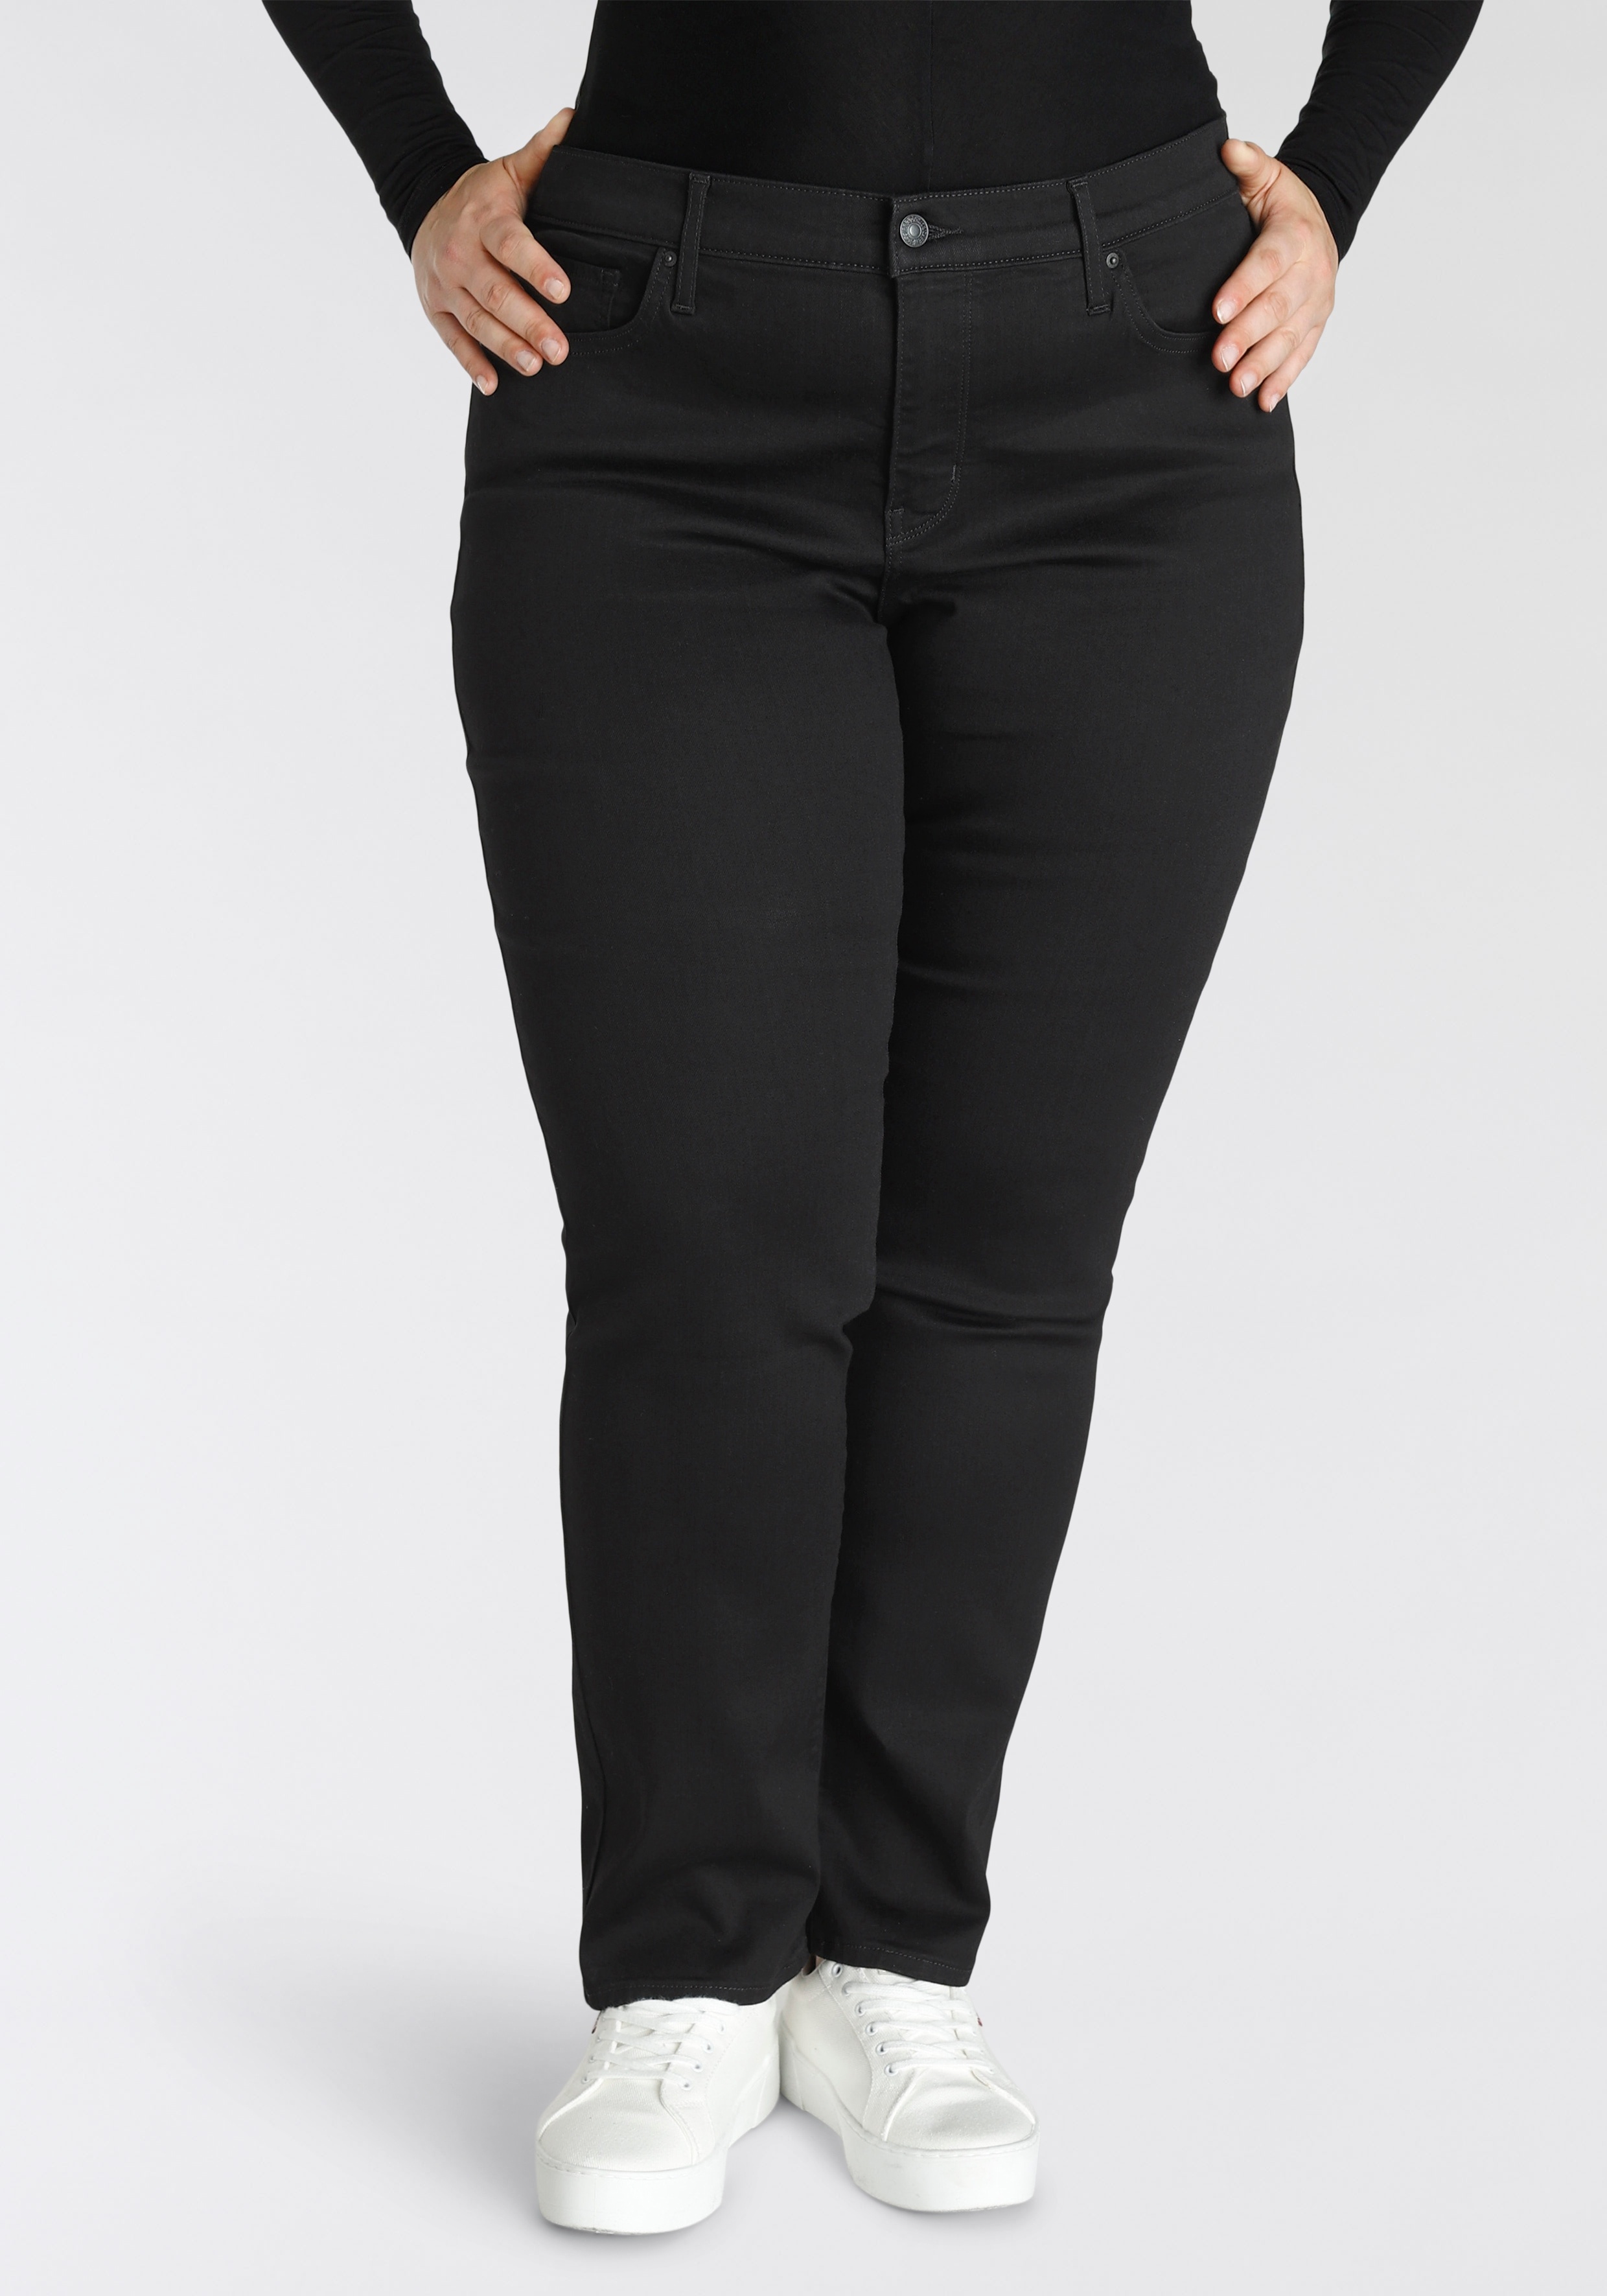 Straight-Jeans LEVI'S PLUS "314 Shaping Straight" Gr. 22 (52), Länge 34, schwarz (soft black) Damen Jeans Gerade